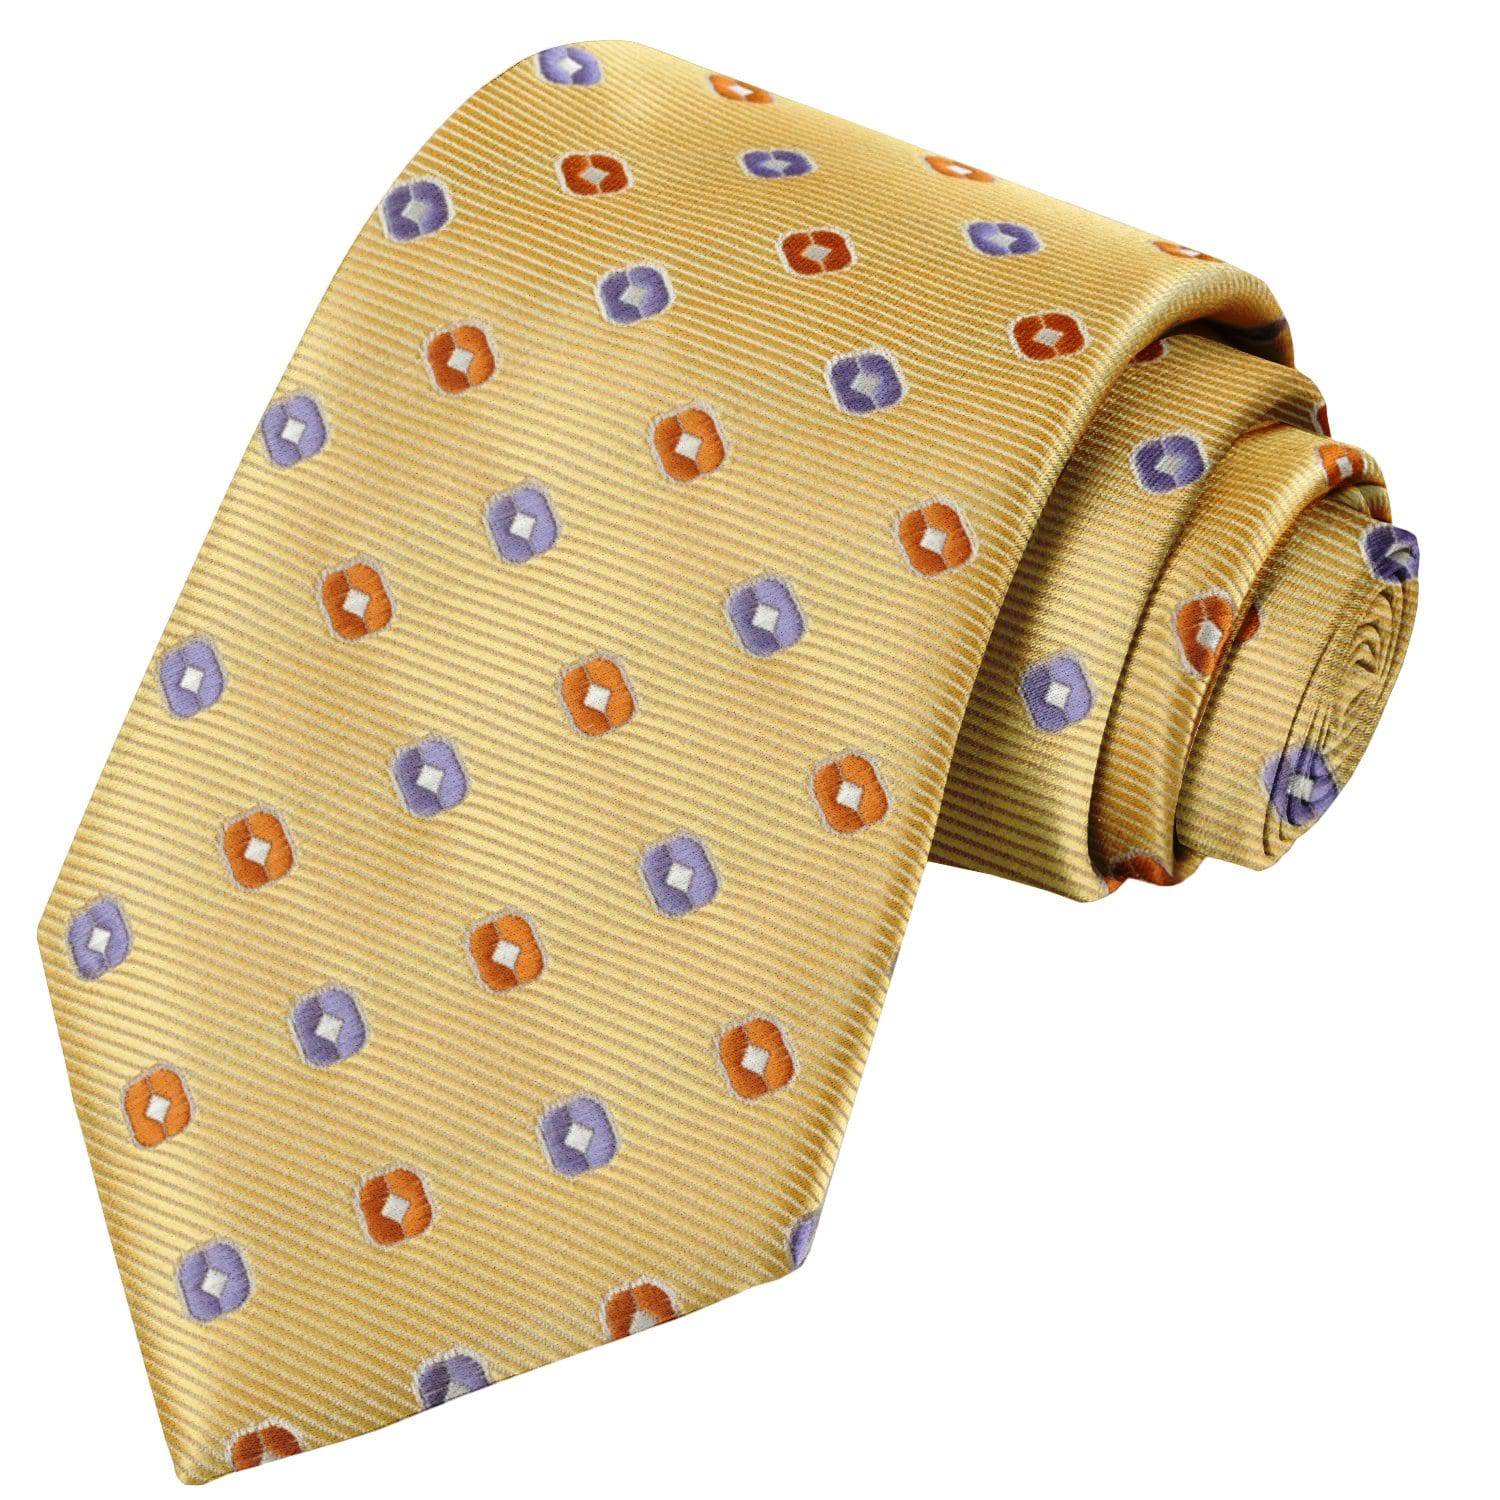 Moody Purple-Fire Yellow-White-Medallion Orange Floral Tie - Tie, bowtie, pocket square  | Kissties